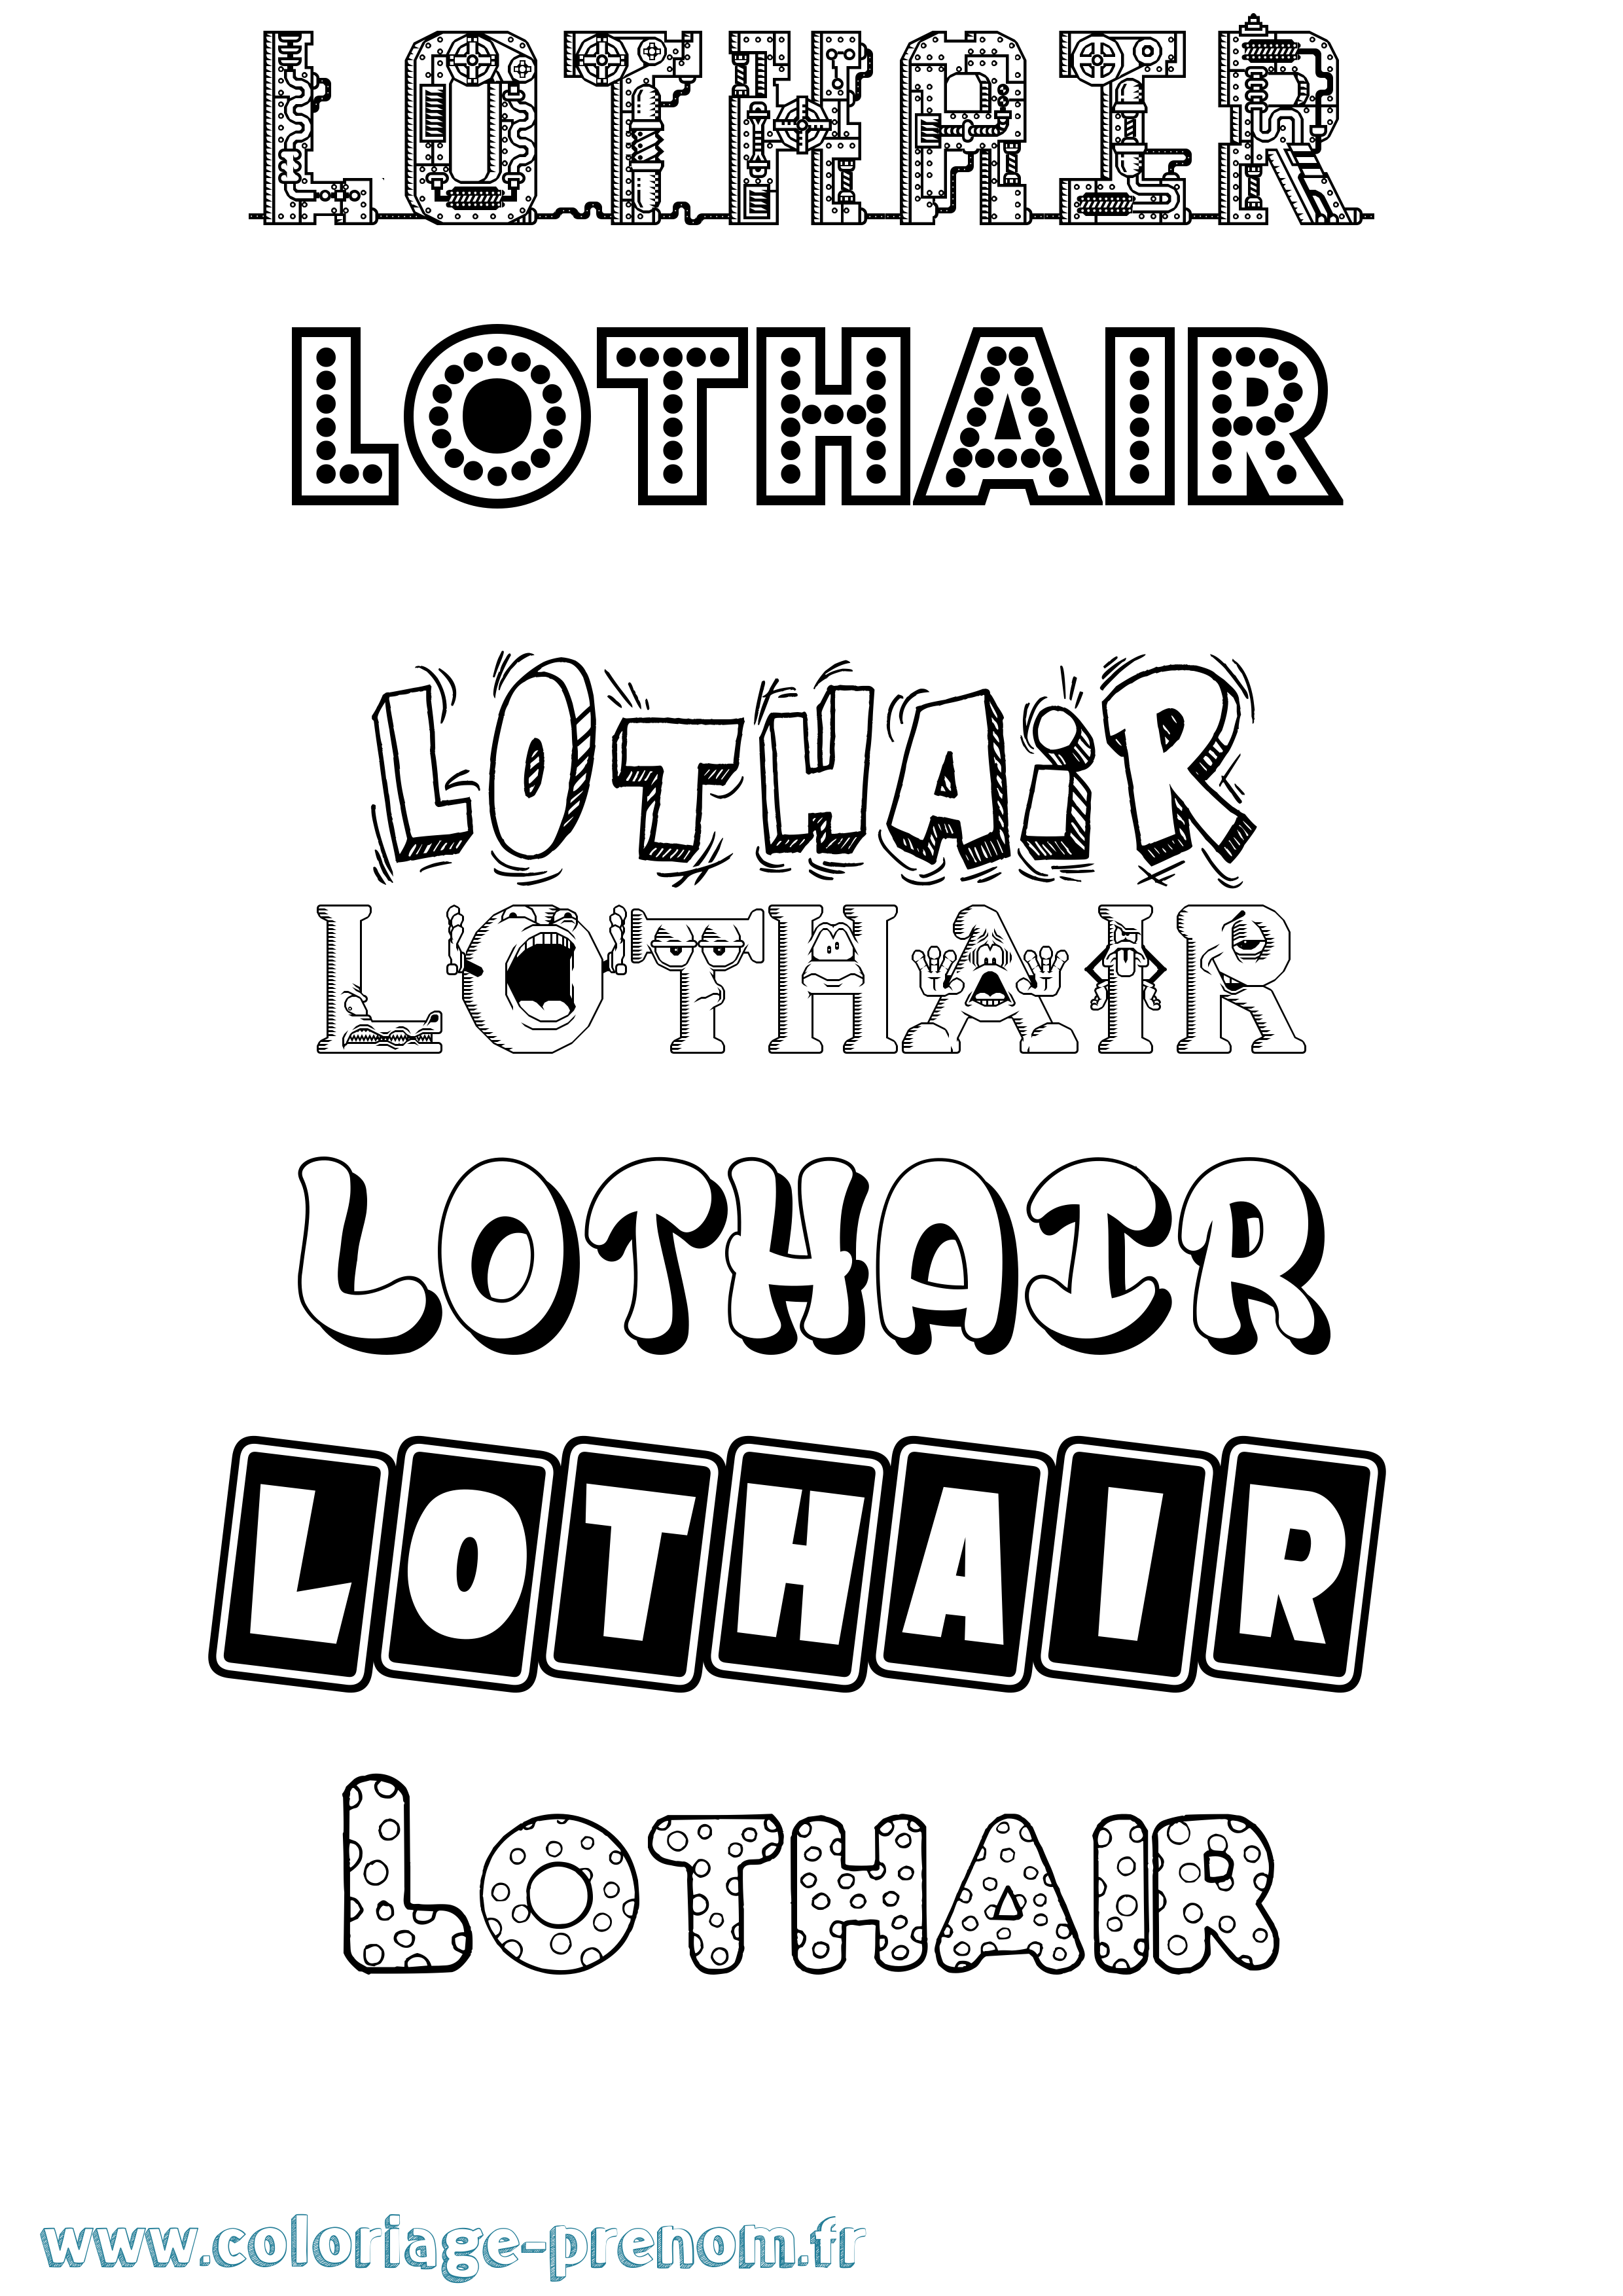 Coloriage prénom Lothair Fun